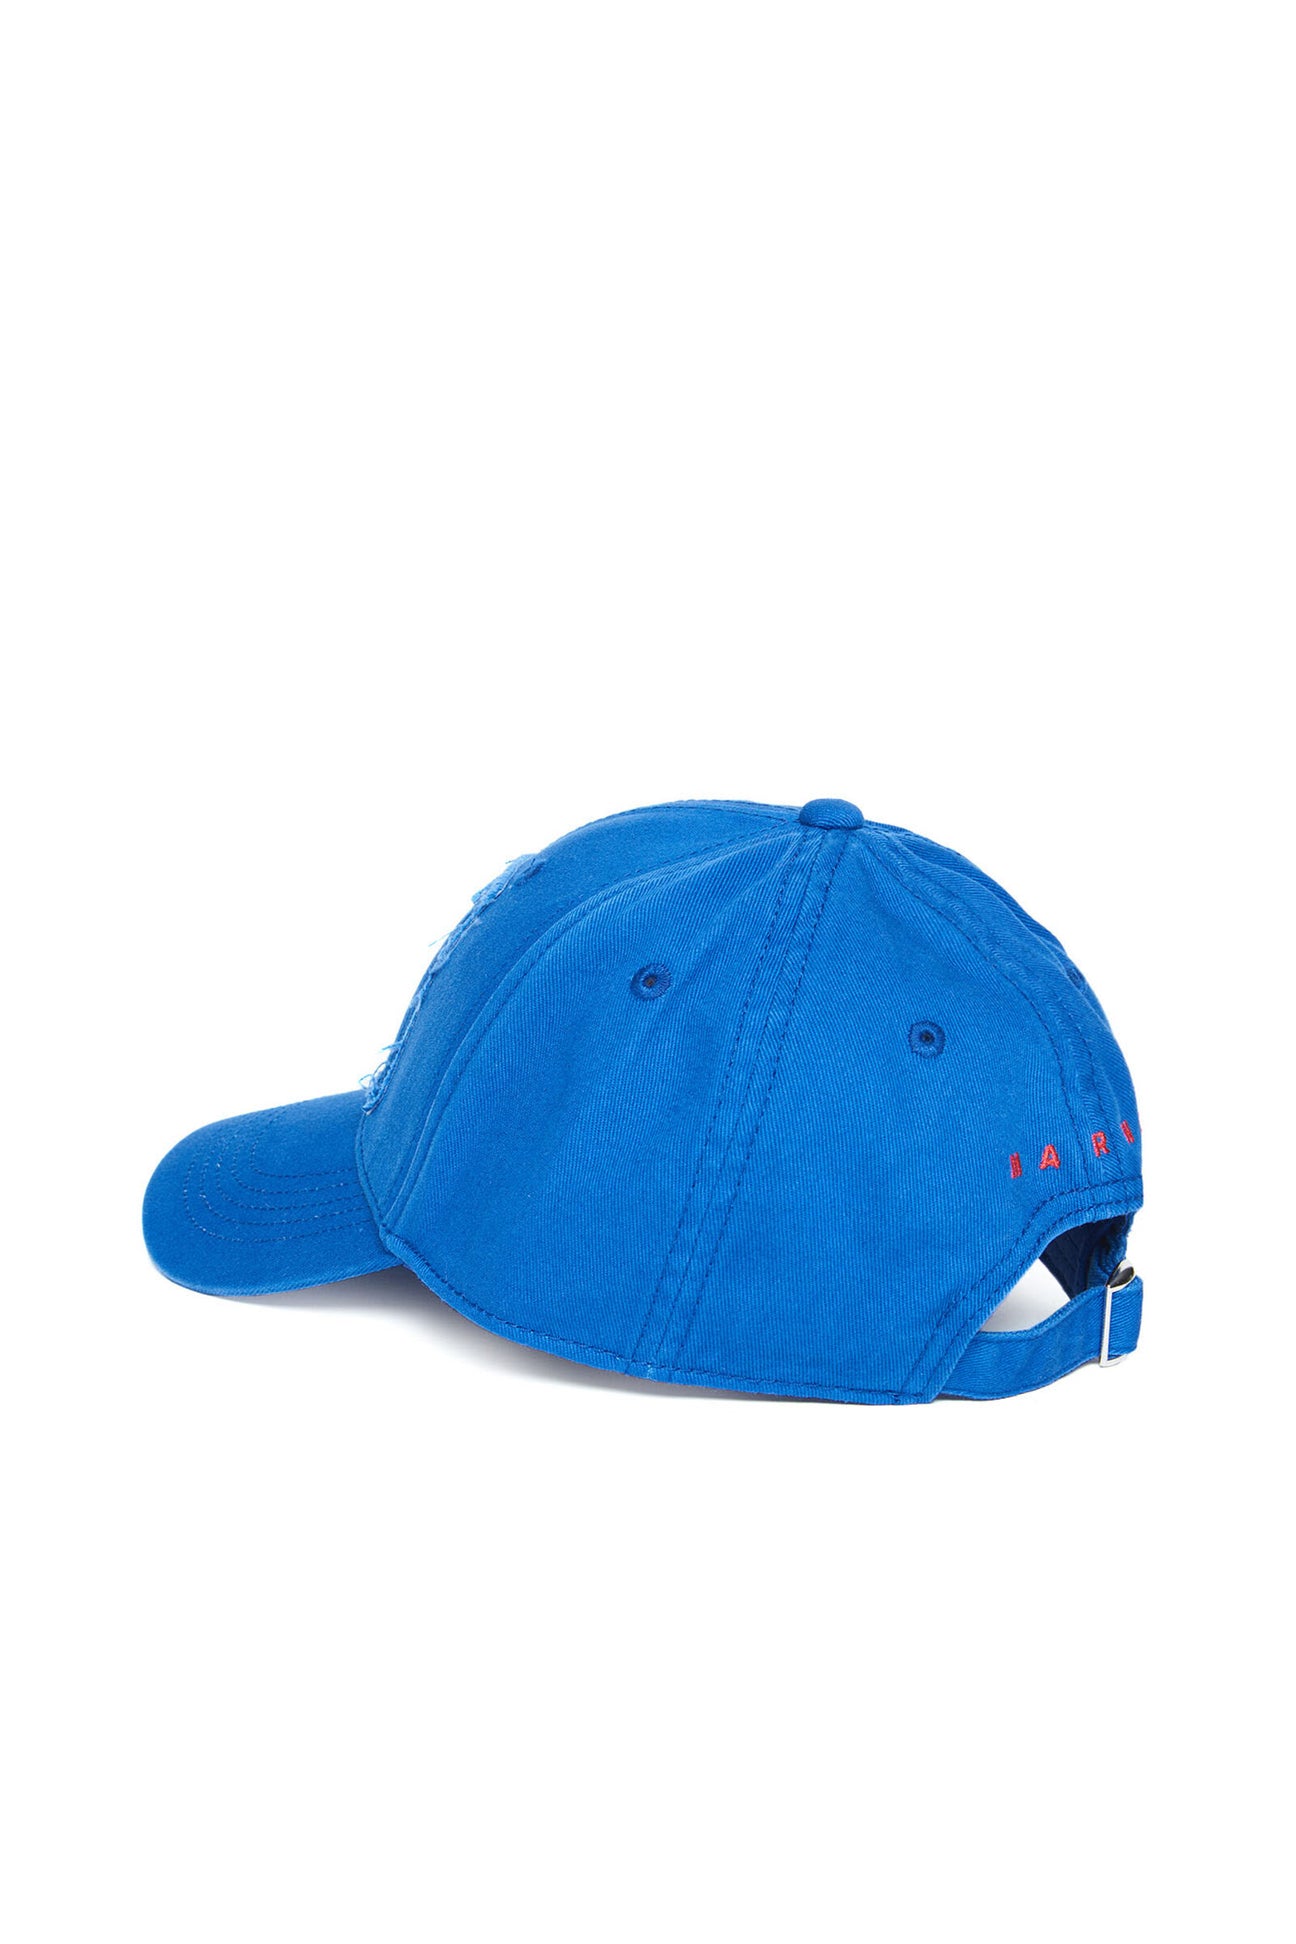 Blue baseball cap with Big M logo Blue baseball cap with Big M logo